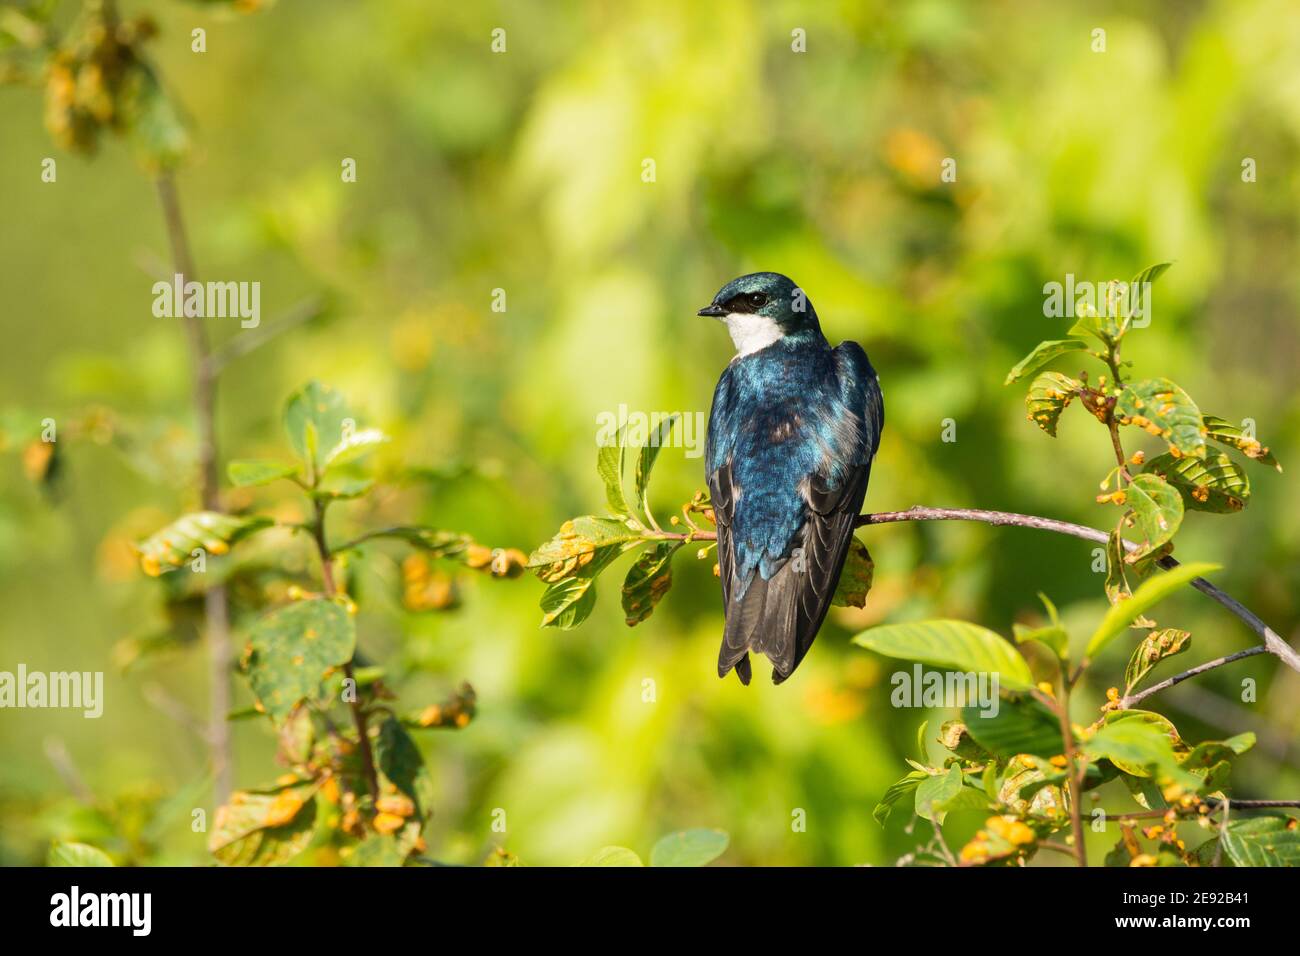 A Tree Swallow perched on bush near a nest box. Stock Photo